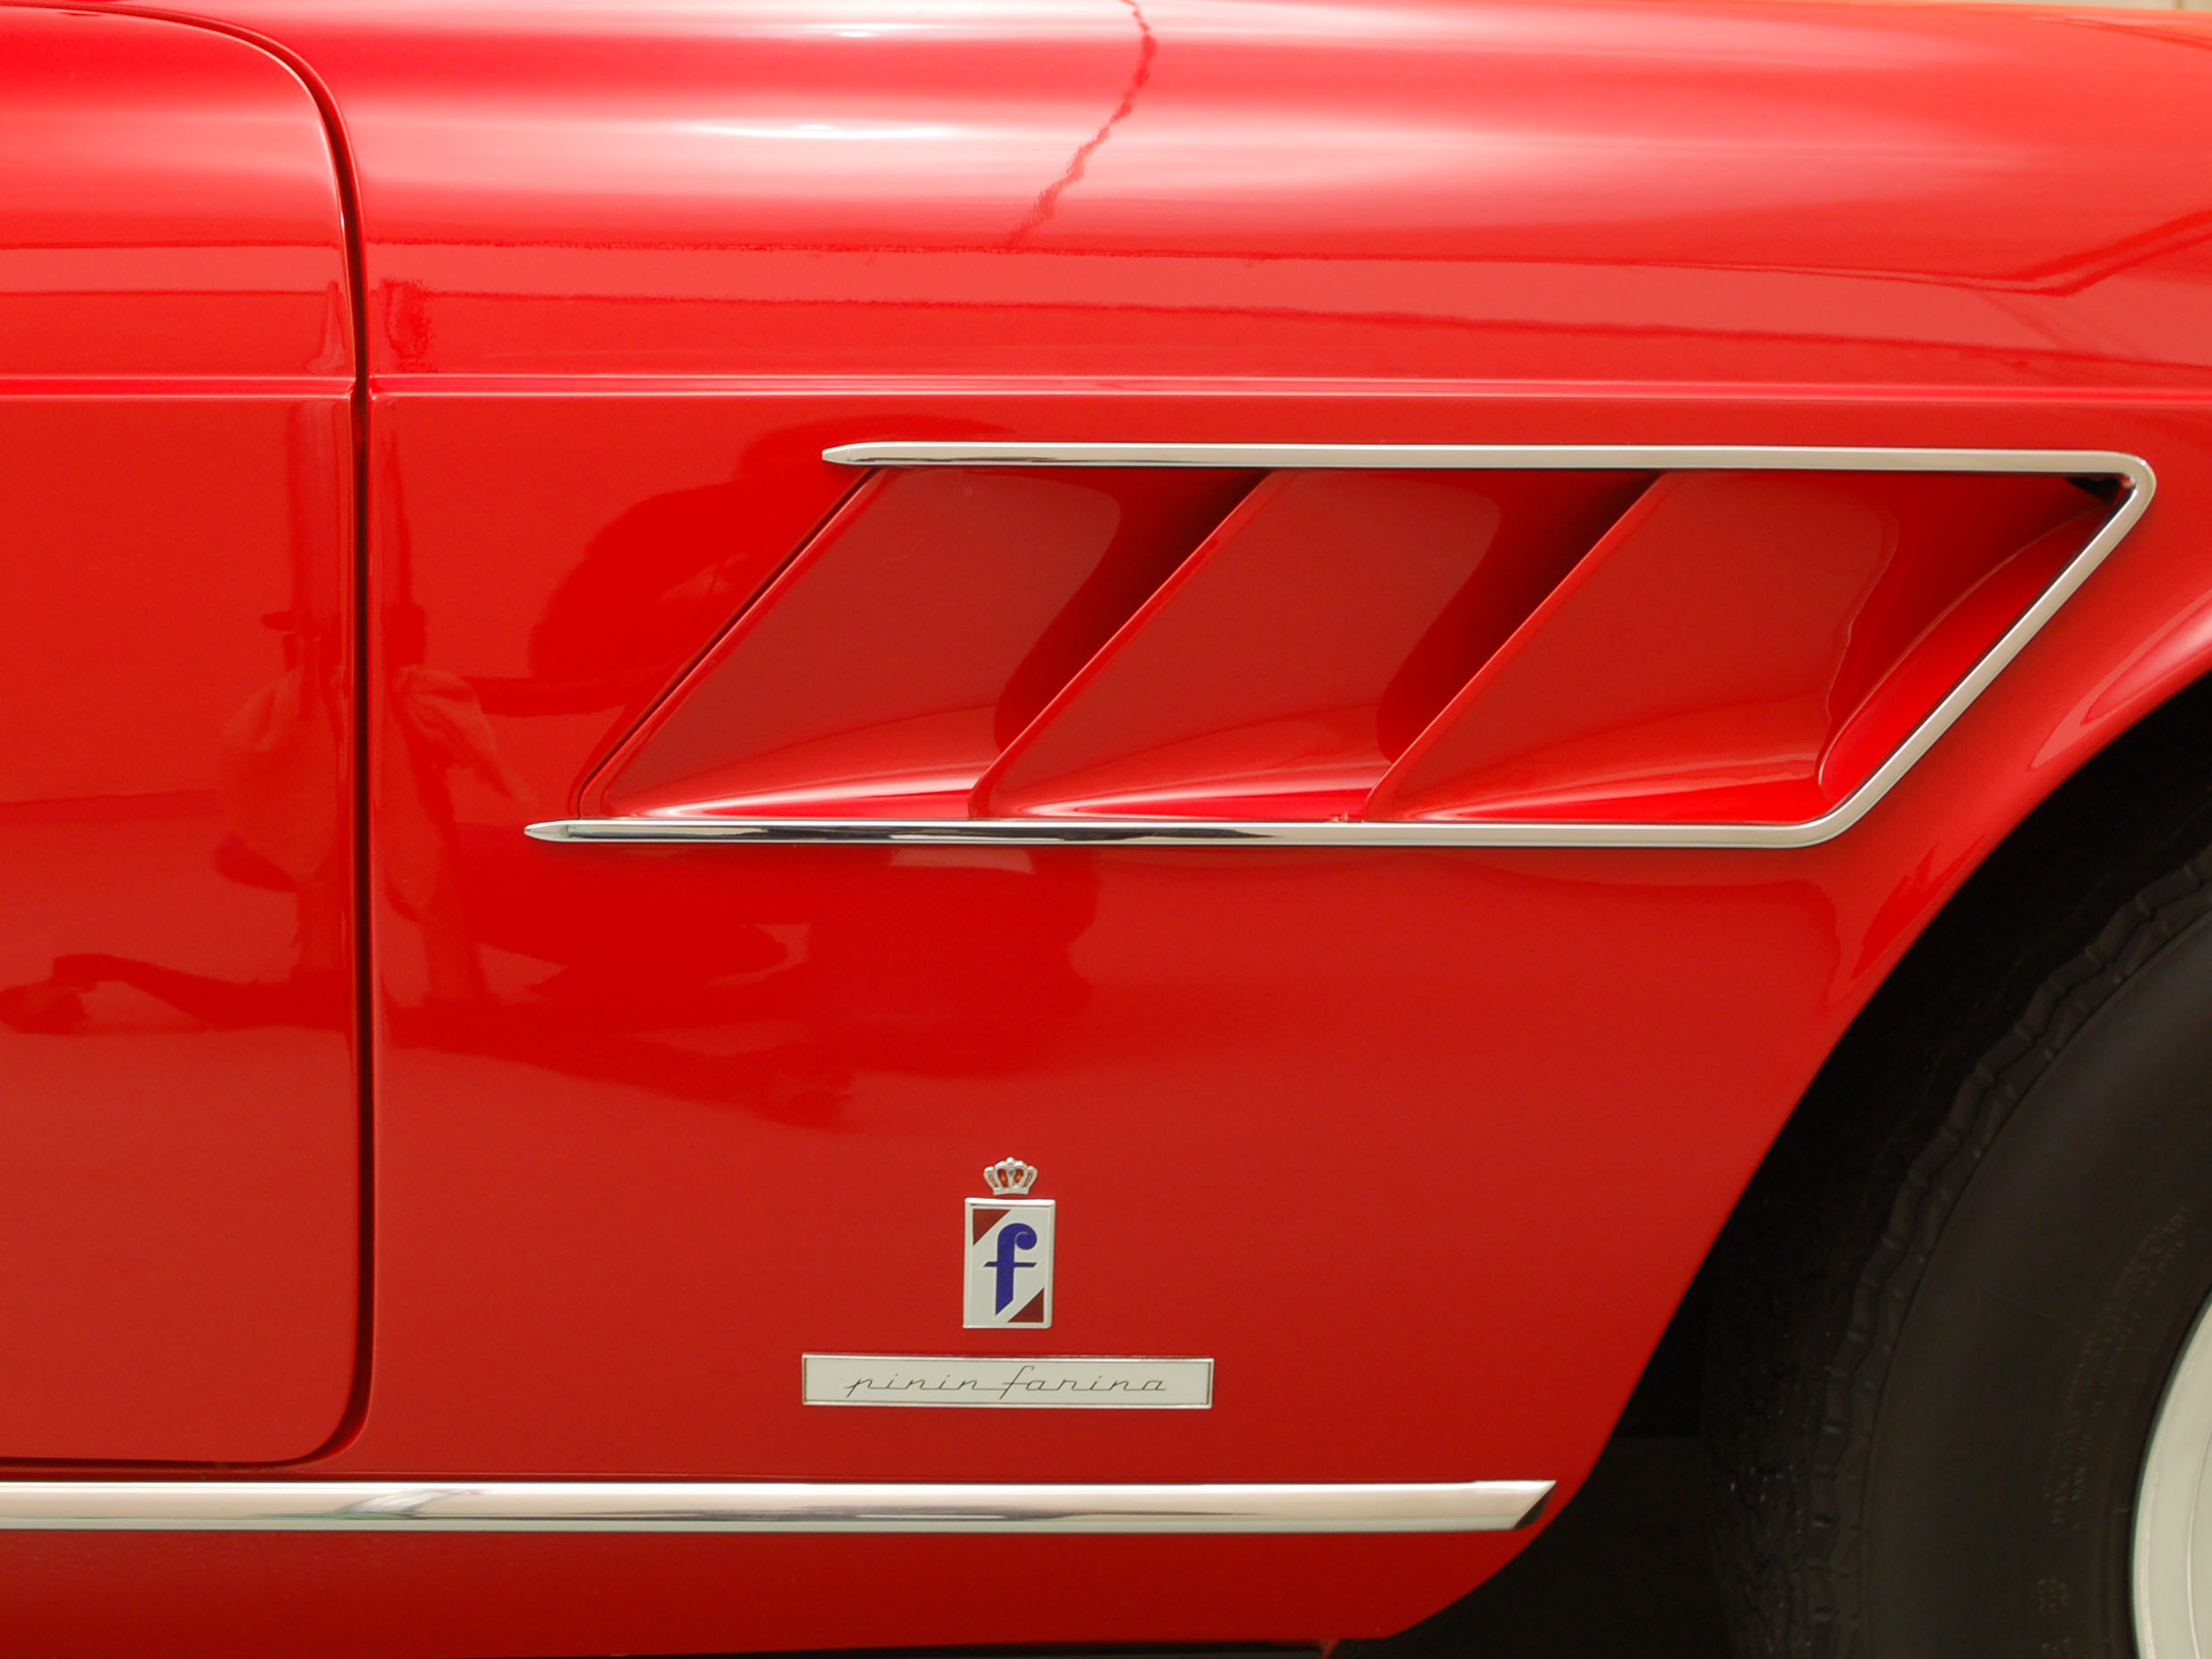 1968 Ferrari 330 GTC